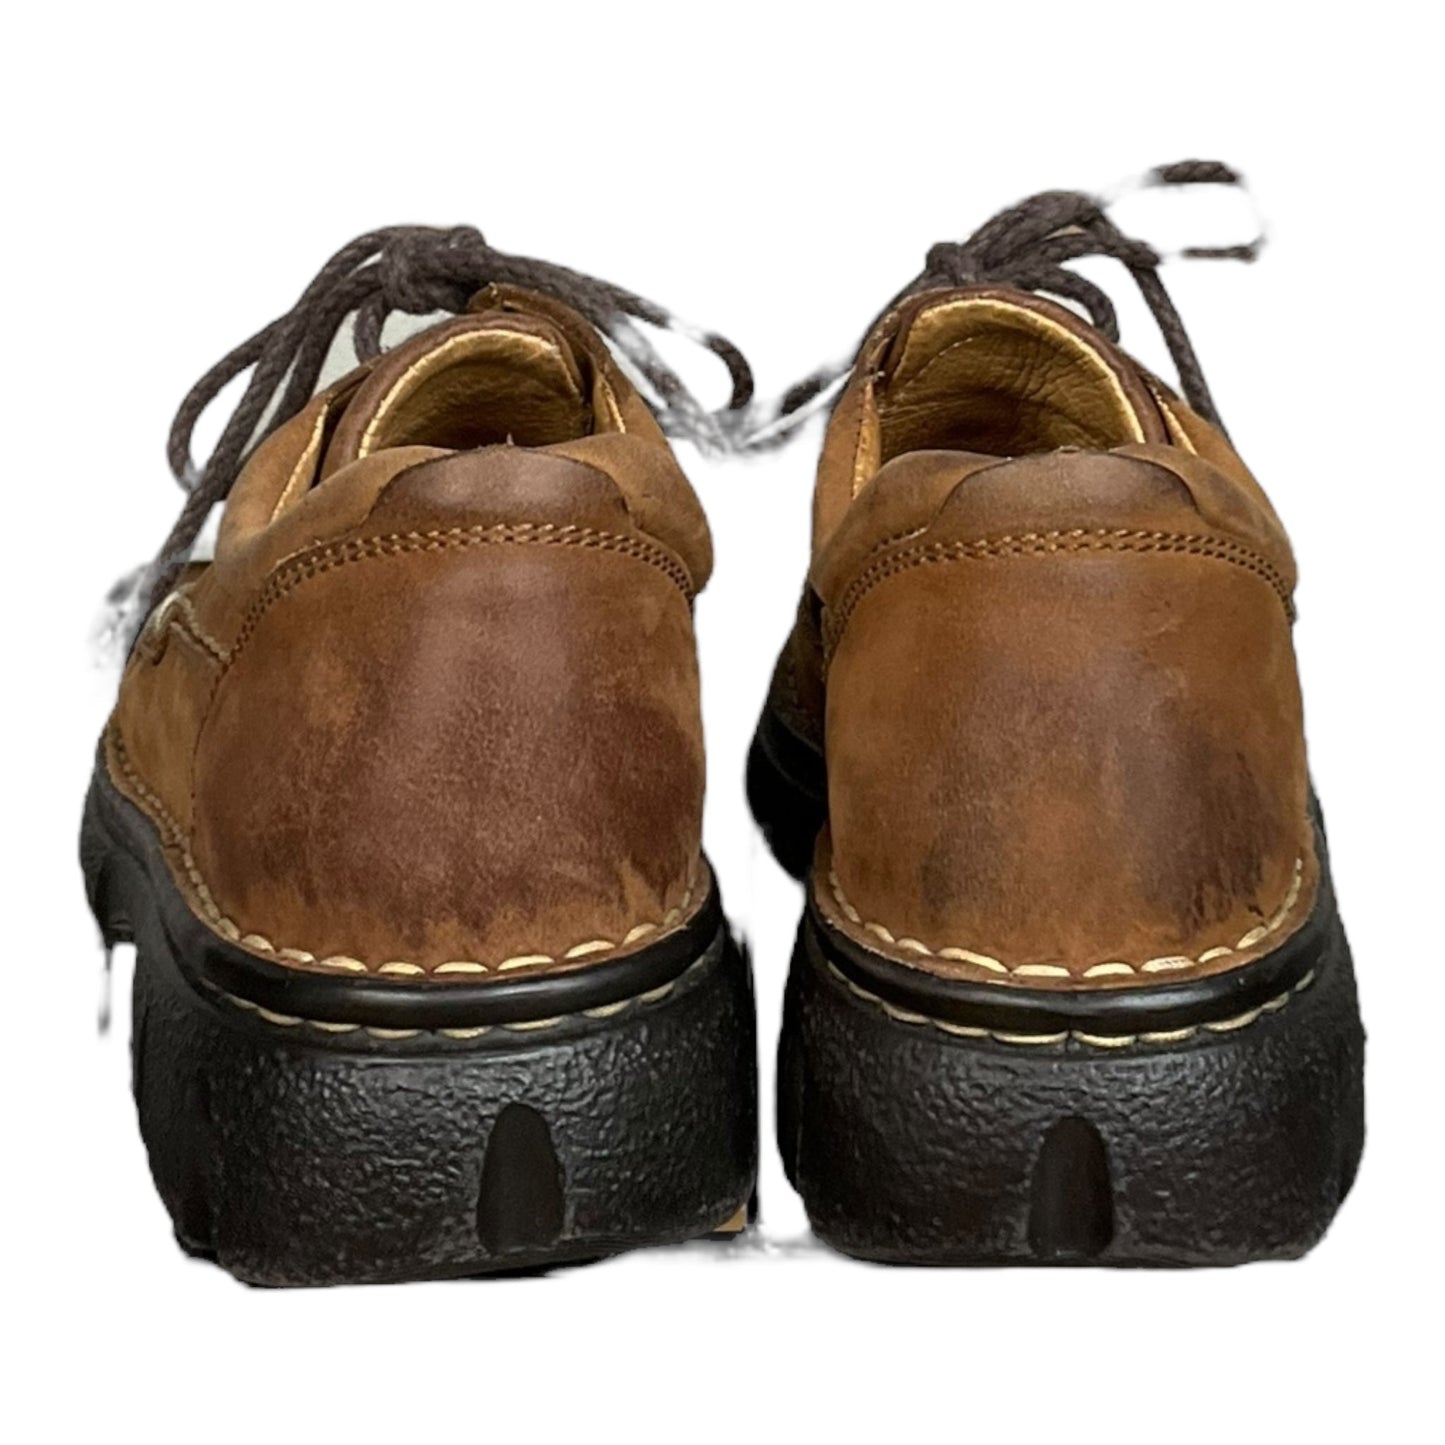 Brown Shoes Flats Born, Size 6.5